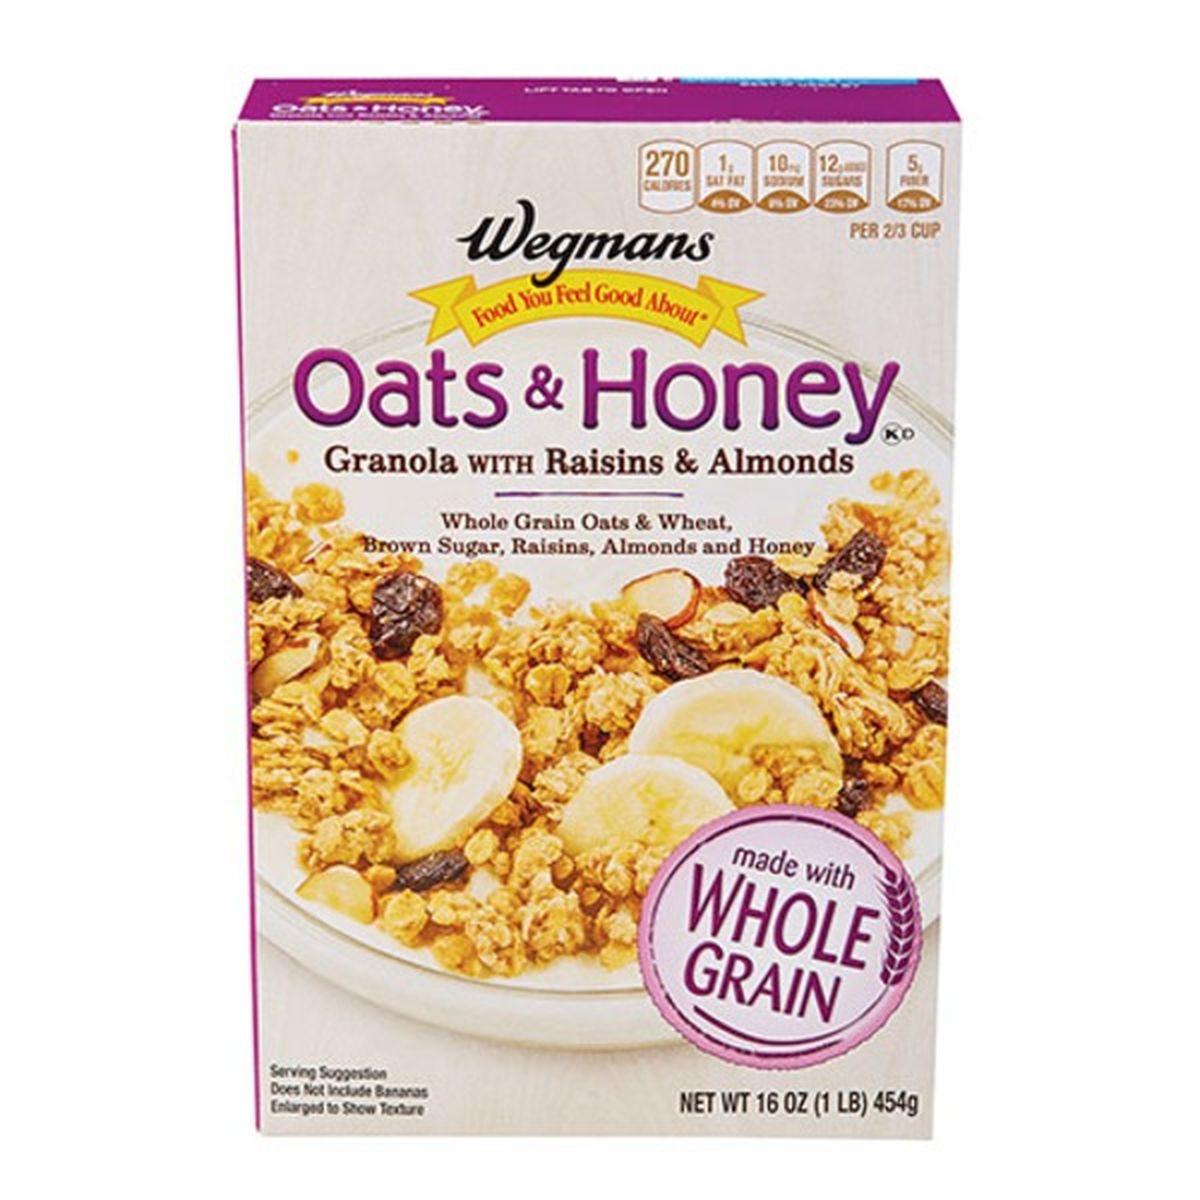 Calories in Wegmans Oats & Honey Granola with Raisins & Almonds Cereal